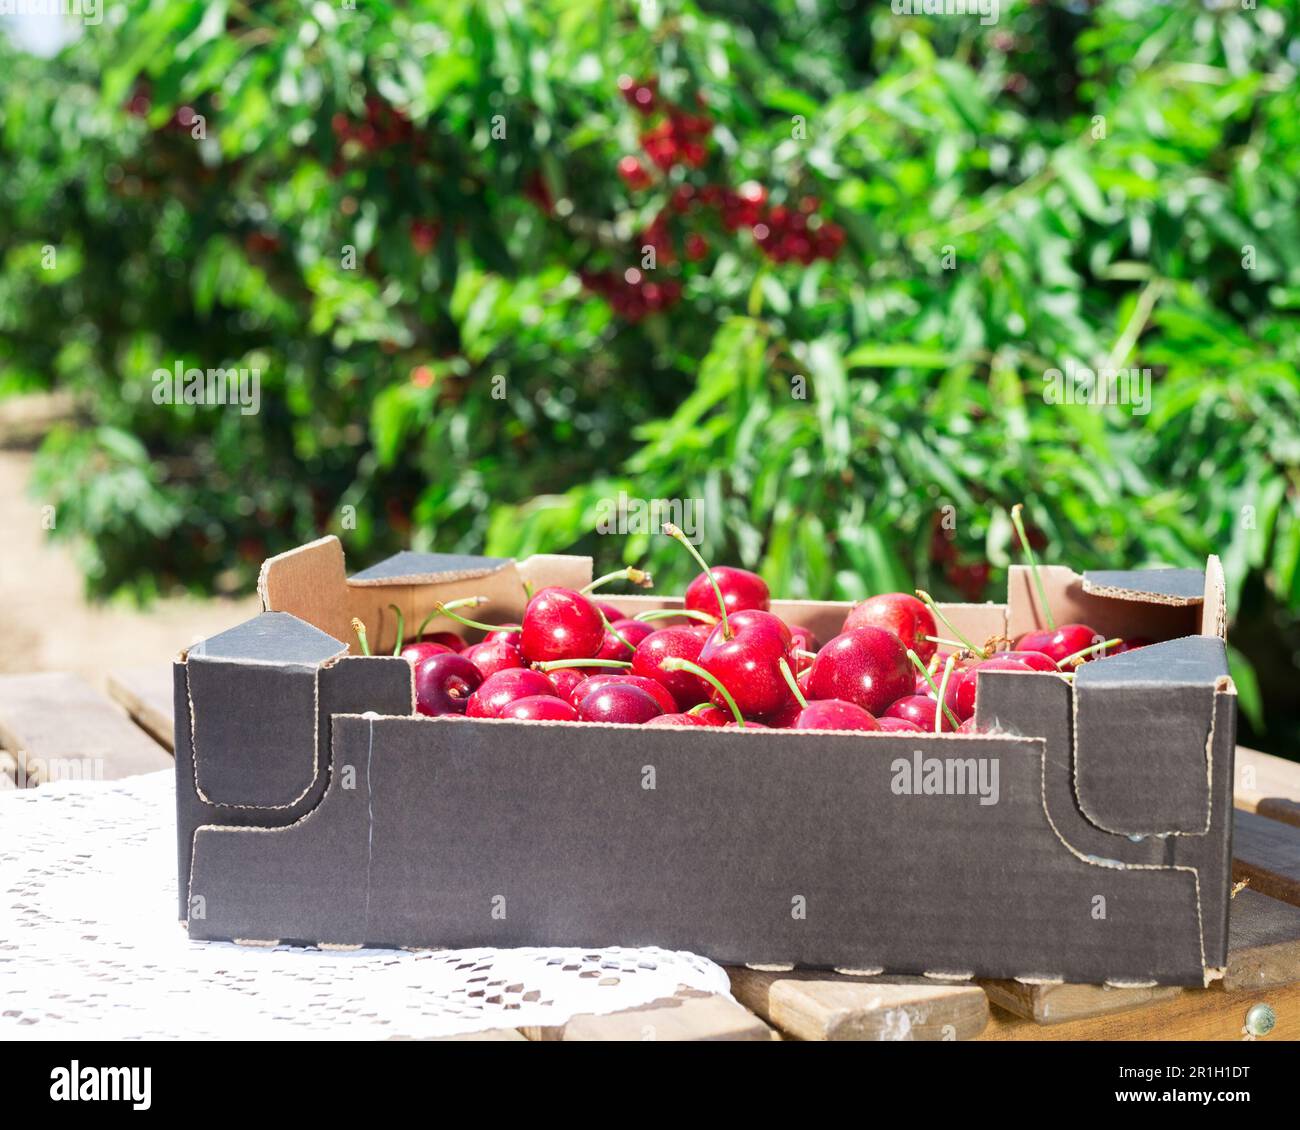 ripe juicy cherries in black cardboard box on table in garden cherry trees Stock Photo